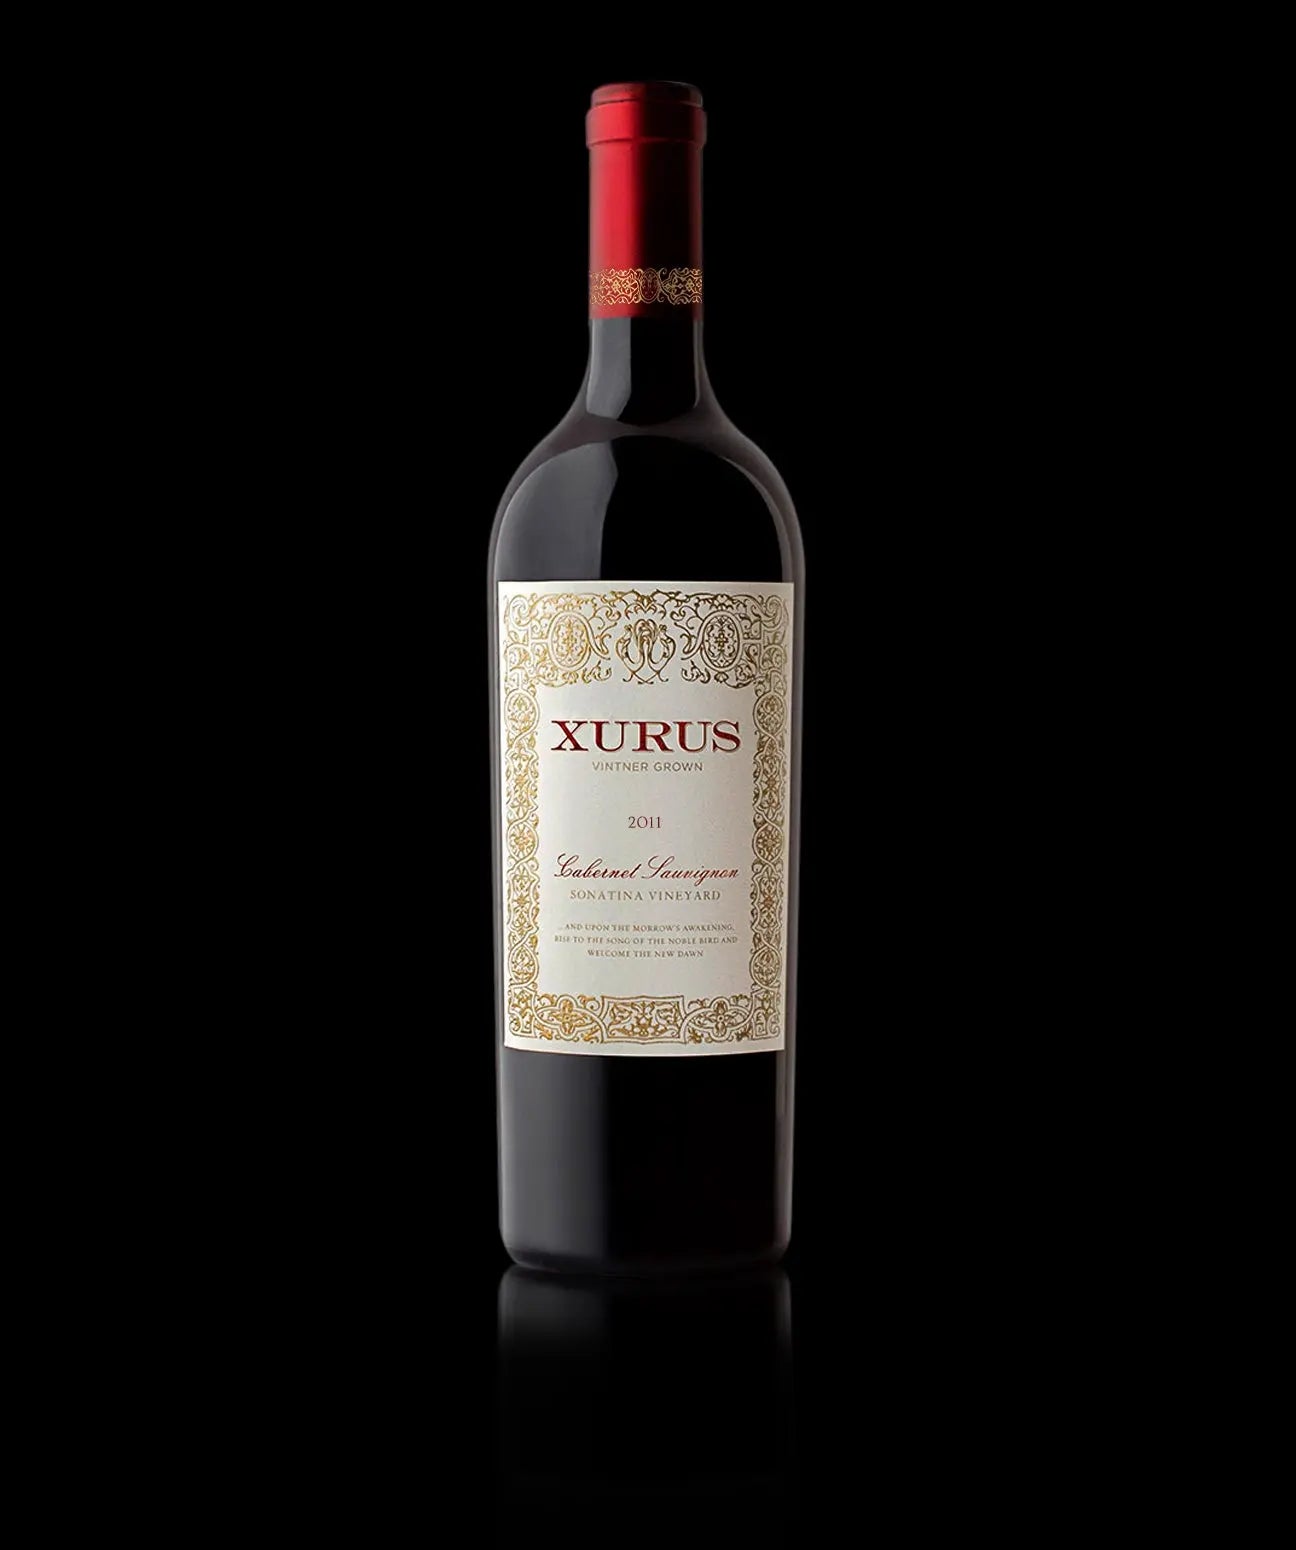 Image of a Xurus Cabernet Sauvignon 2011 bottle.